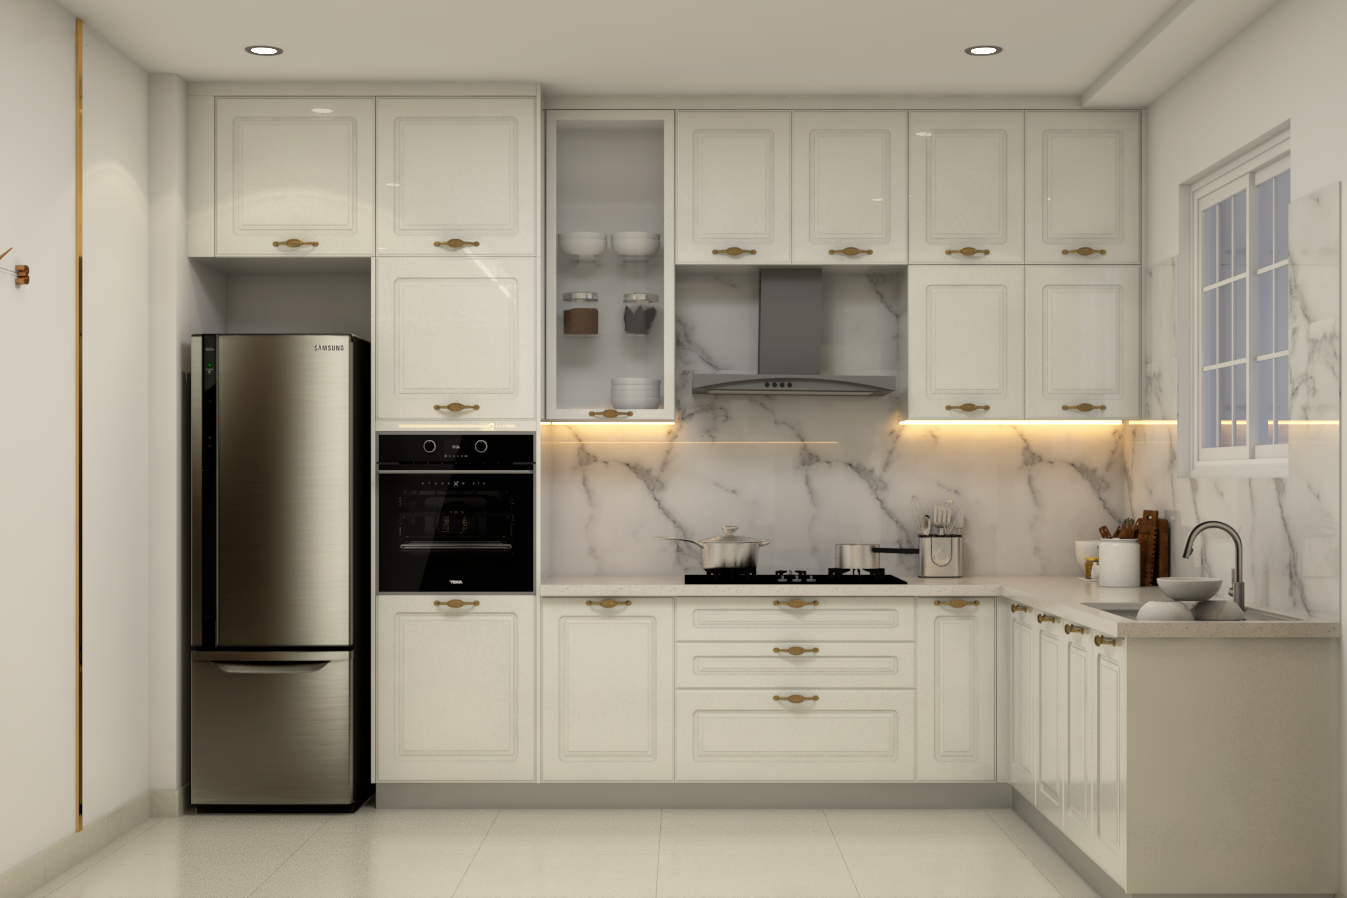 Spacious Classic Themed Low-Maintenance Kitchen Design | Livspace